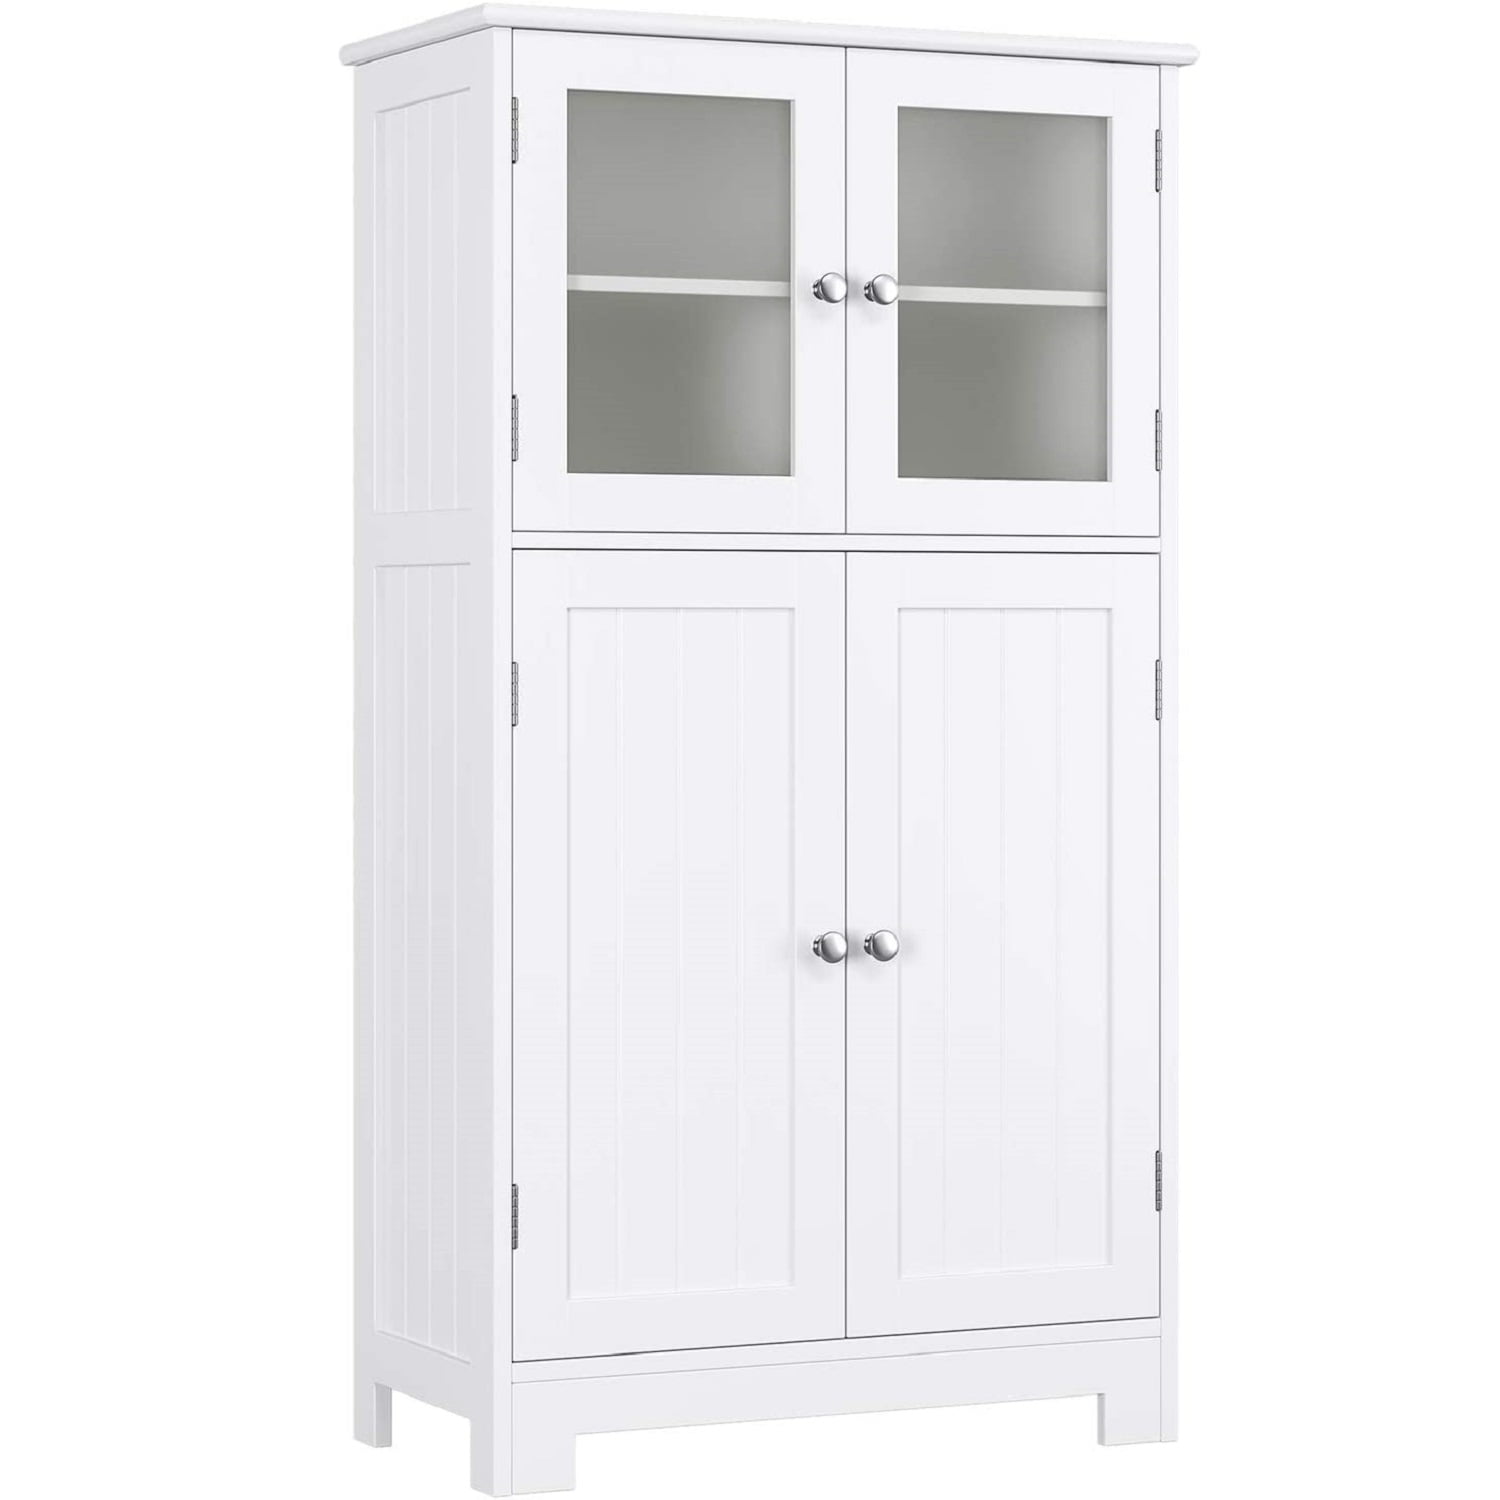 Homfa Bathroom Storage Cabinet Floor Standing Cupboard with Shelves and Doors White 45x30x83.5cm 1 Set 